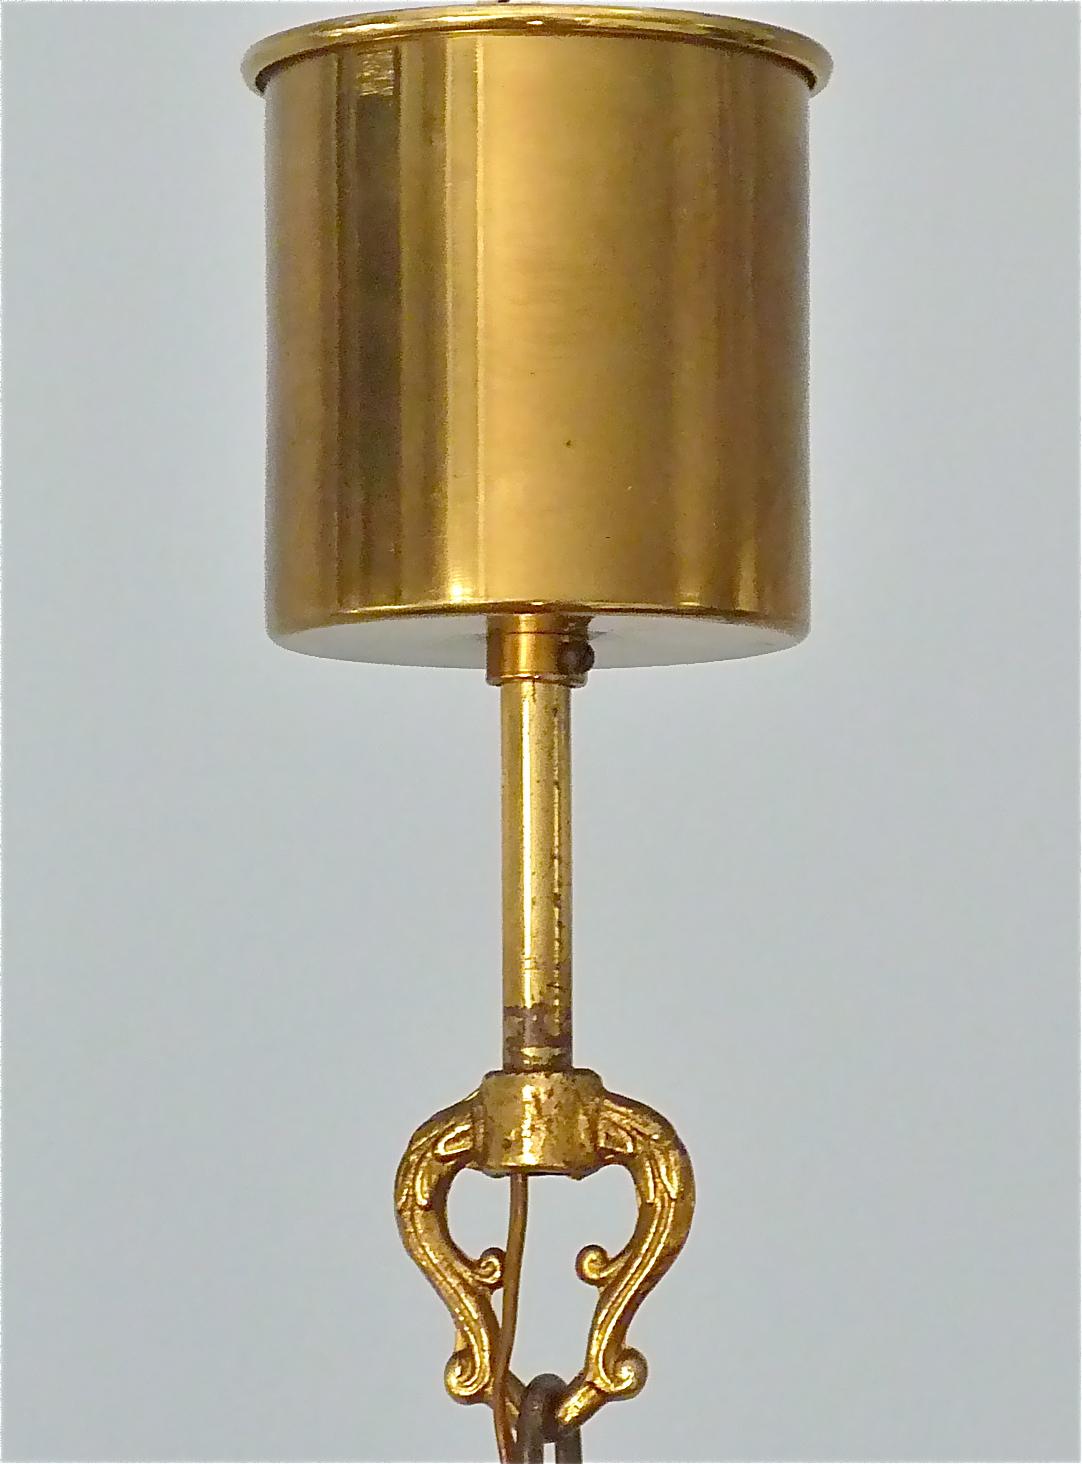 Rare Fontana Arte Pietro Chiesa Style Lantern Italian Lamp Brass Bent Glass 1950 For Sale 2